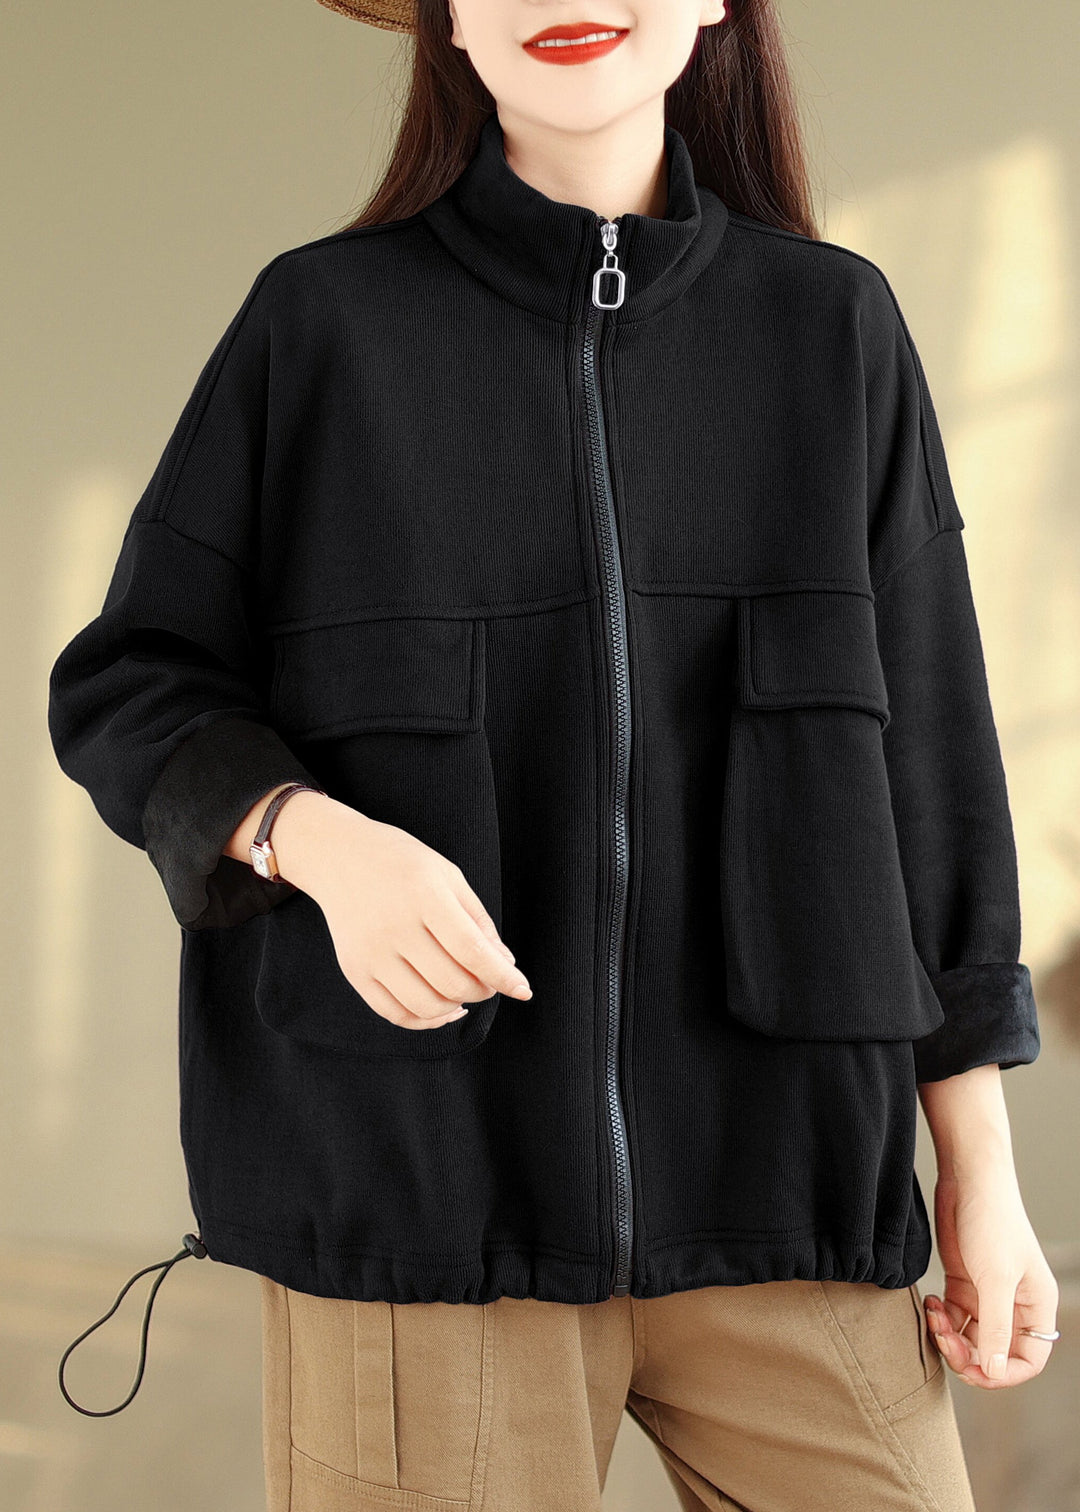 Black Pockets Patchwork Plus Size Warm Fleece Coat Zip Up Fall